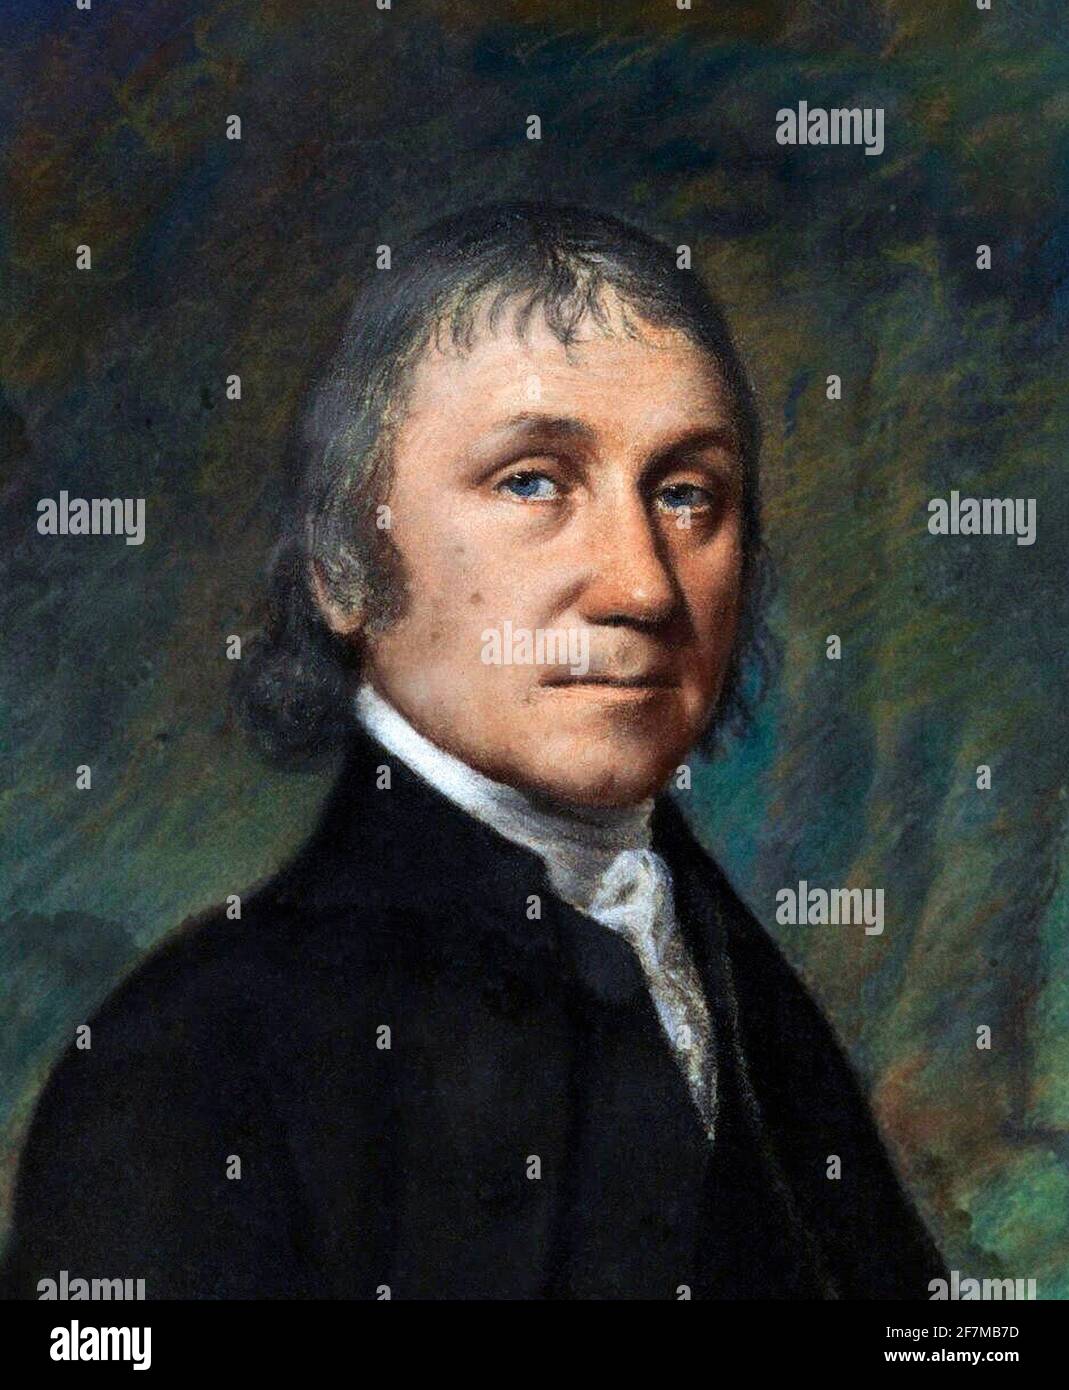 Joseph Priestley. Portrait of the English chemist and natural philosopher, Joseph Priestley (1733-1804) by Ellen Sharples, pastels, c. 1797 Stock Photo